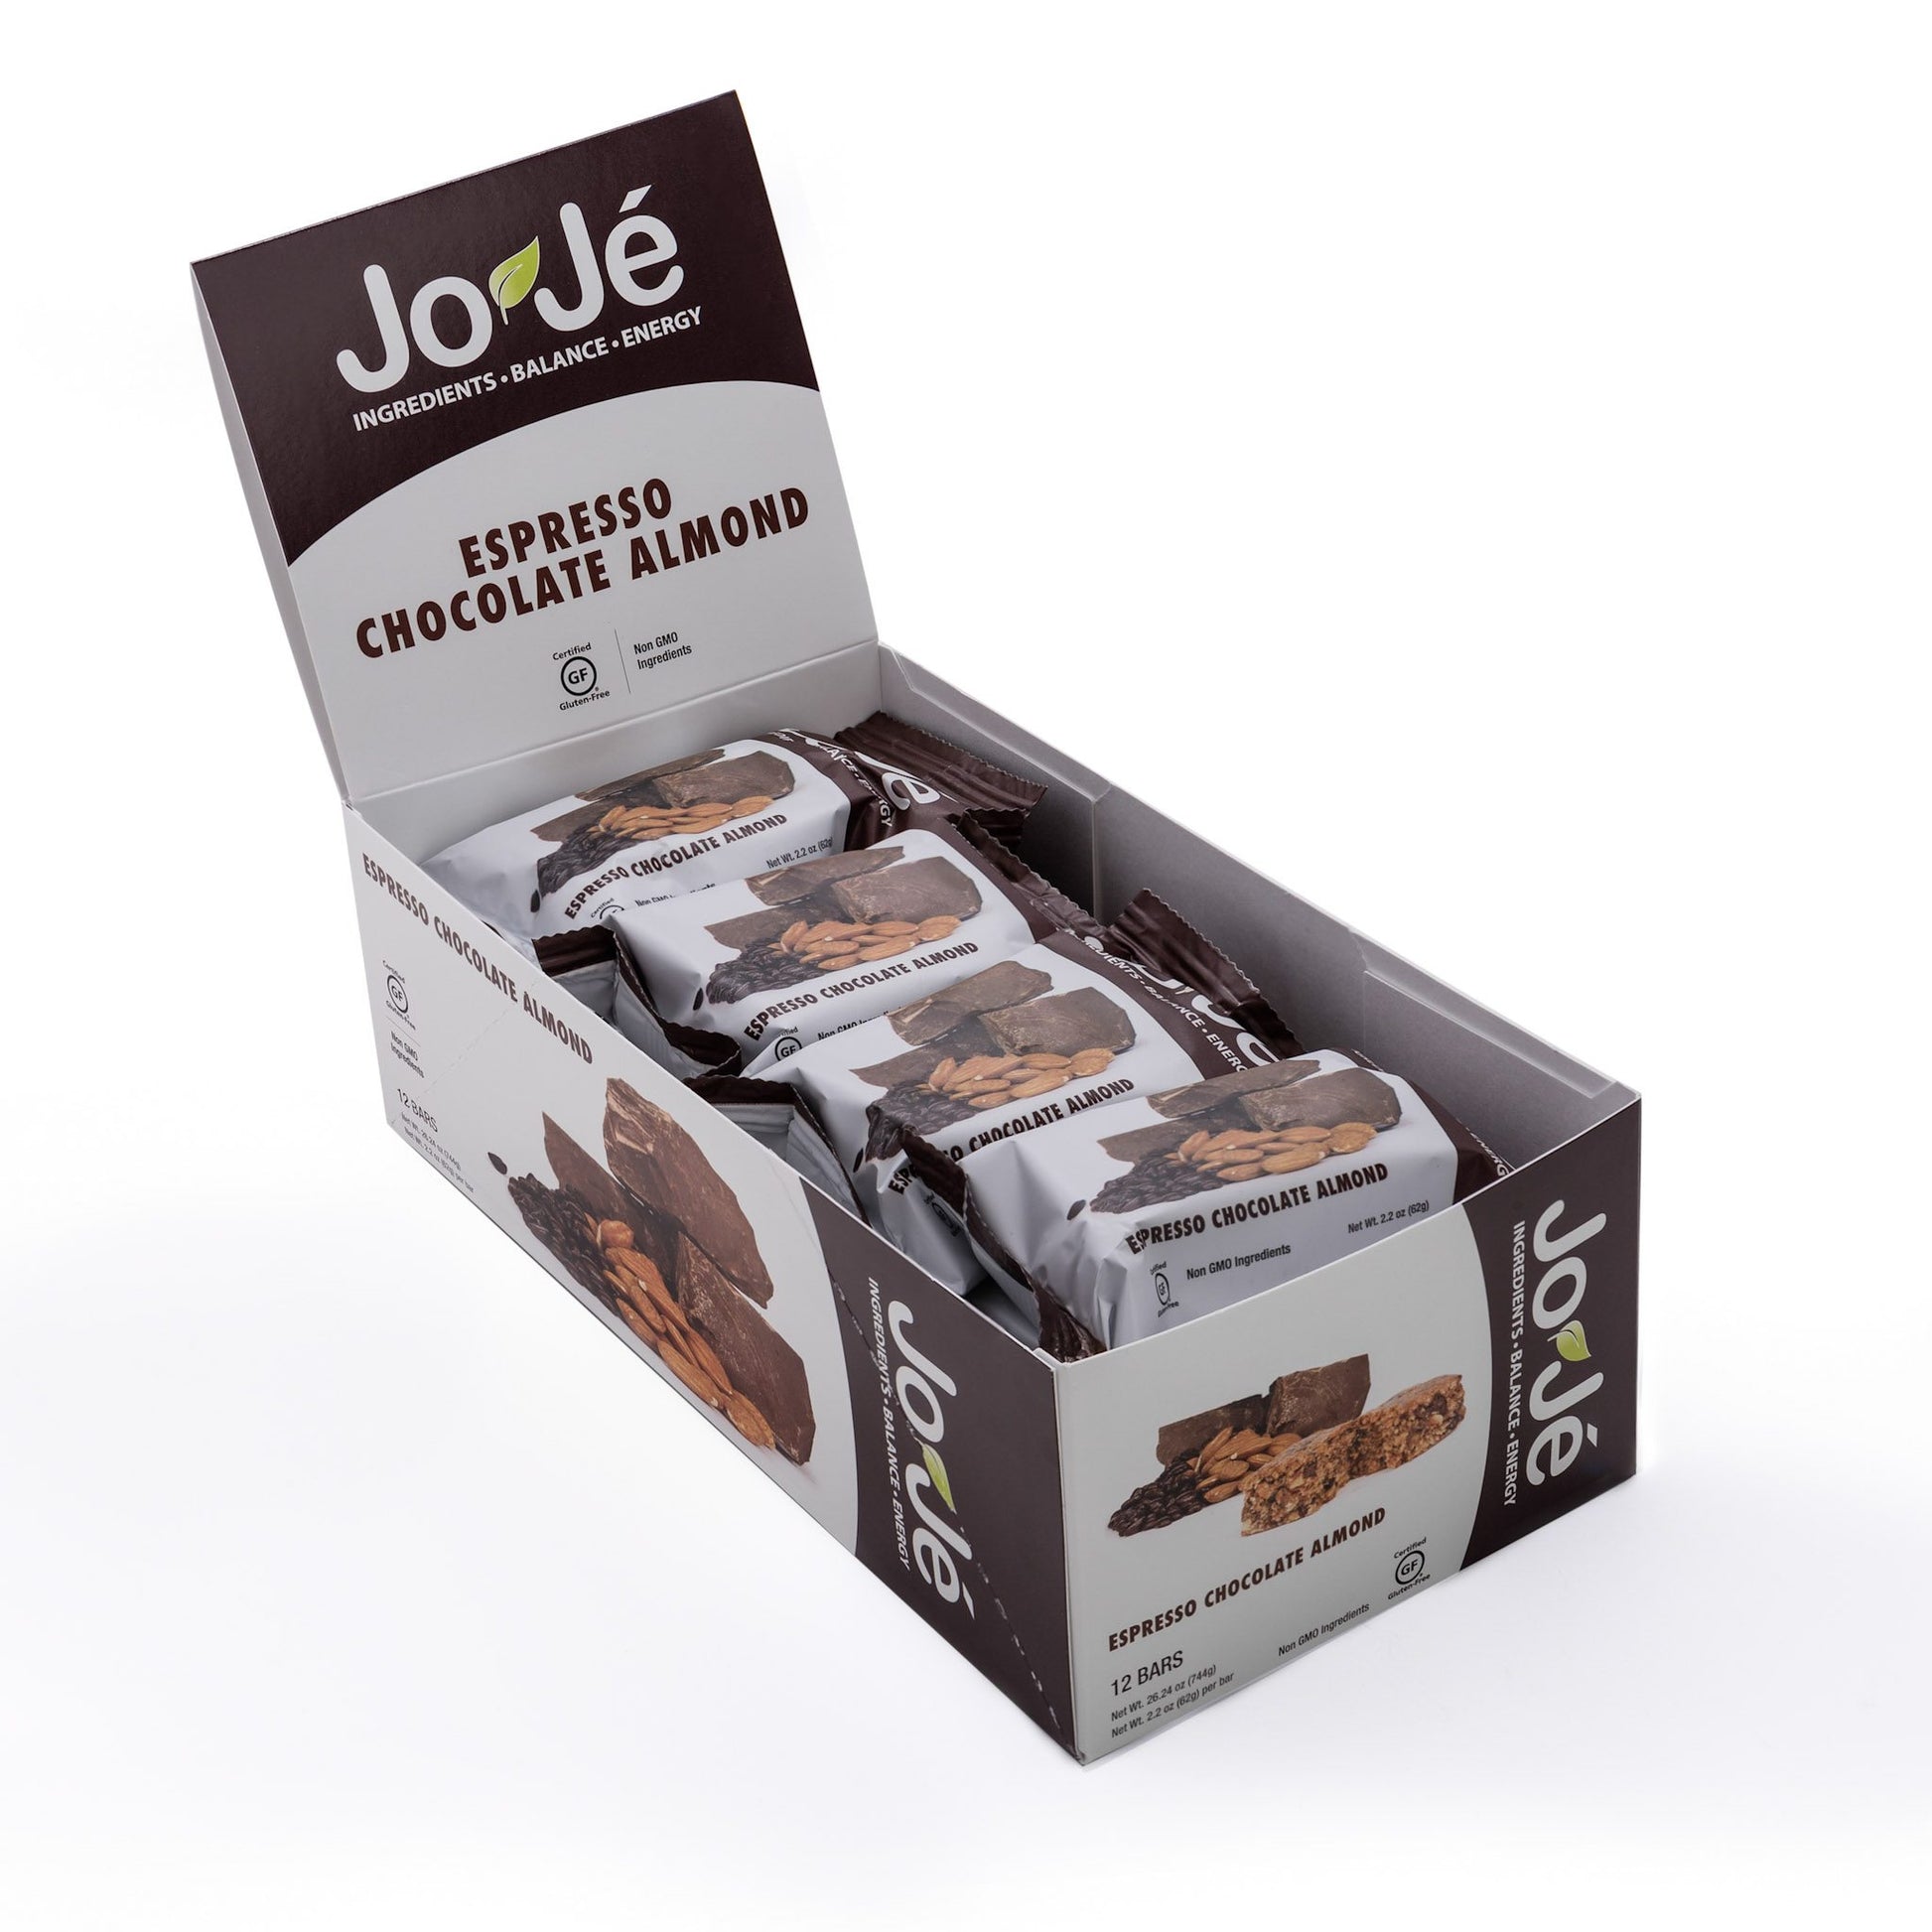 JoJé Espresso Chocolate Almond Bars display box of 12